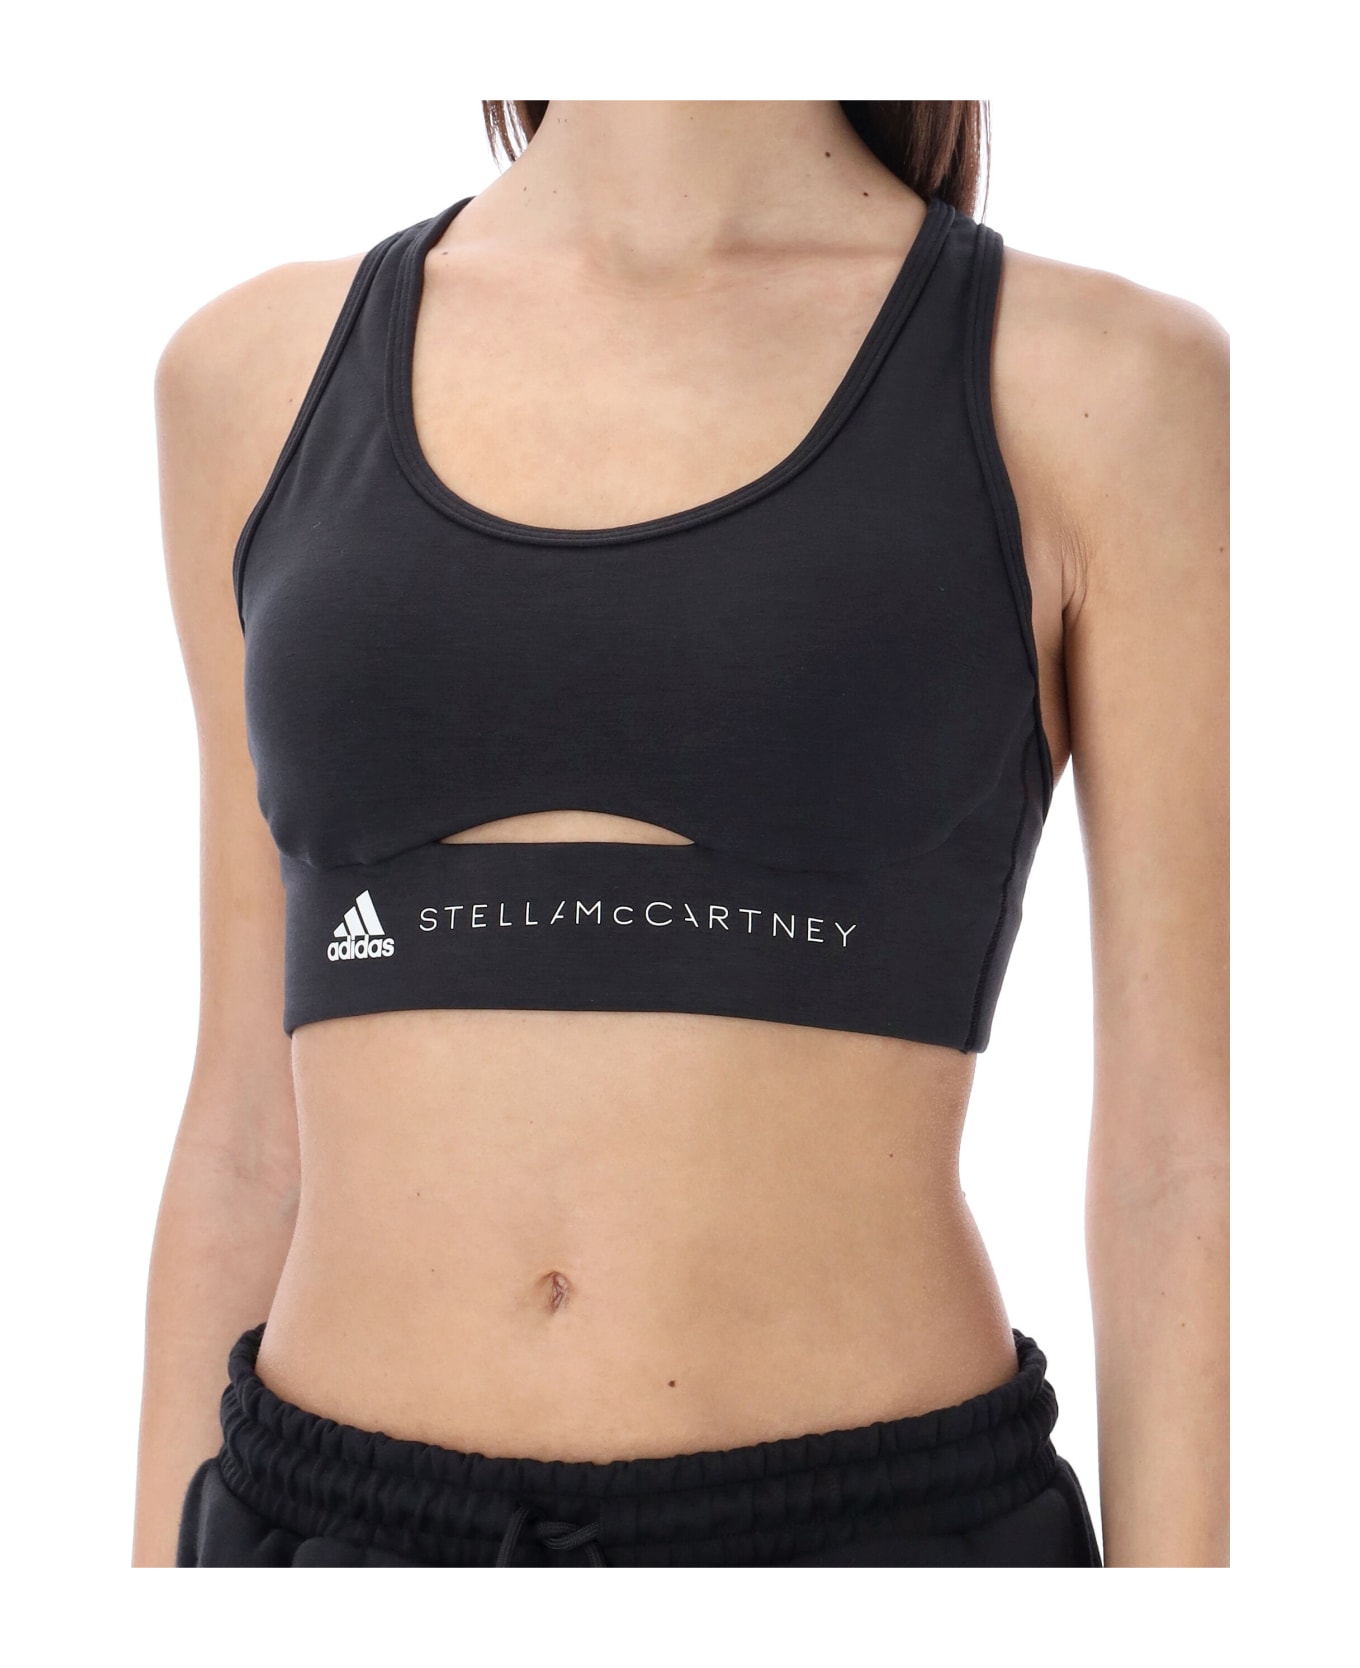 Adidas by Stella McCartney Truestrength Yoga Medium Support Sports Bra - Black